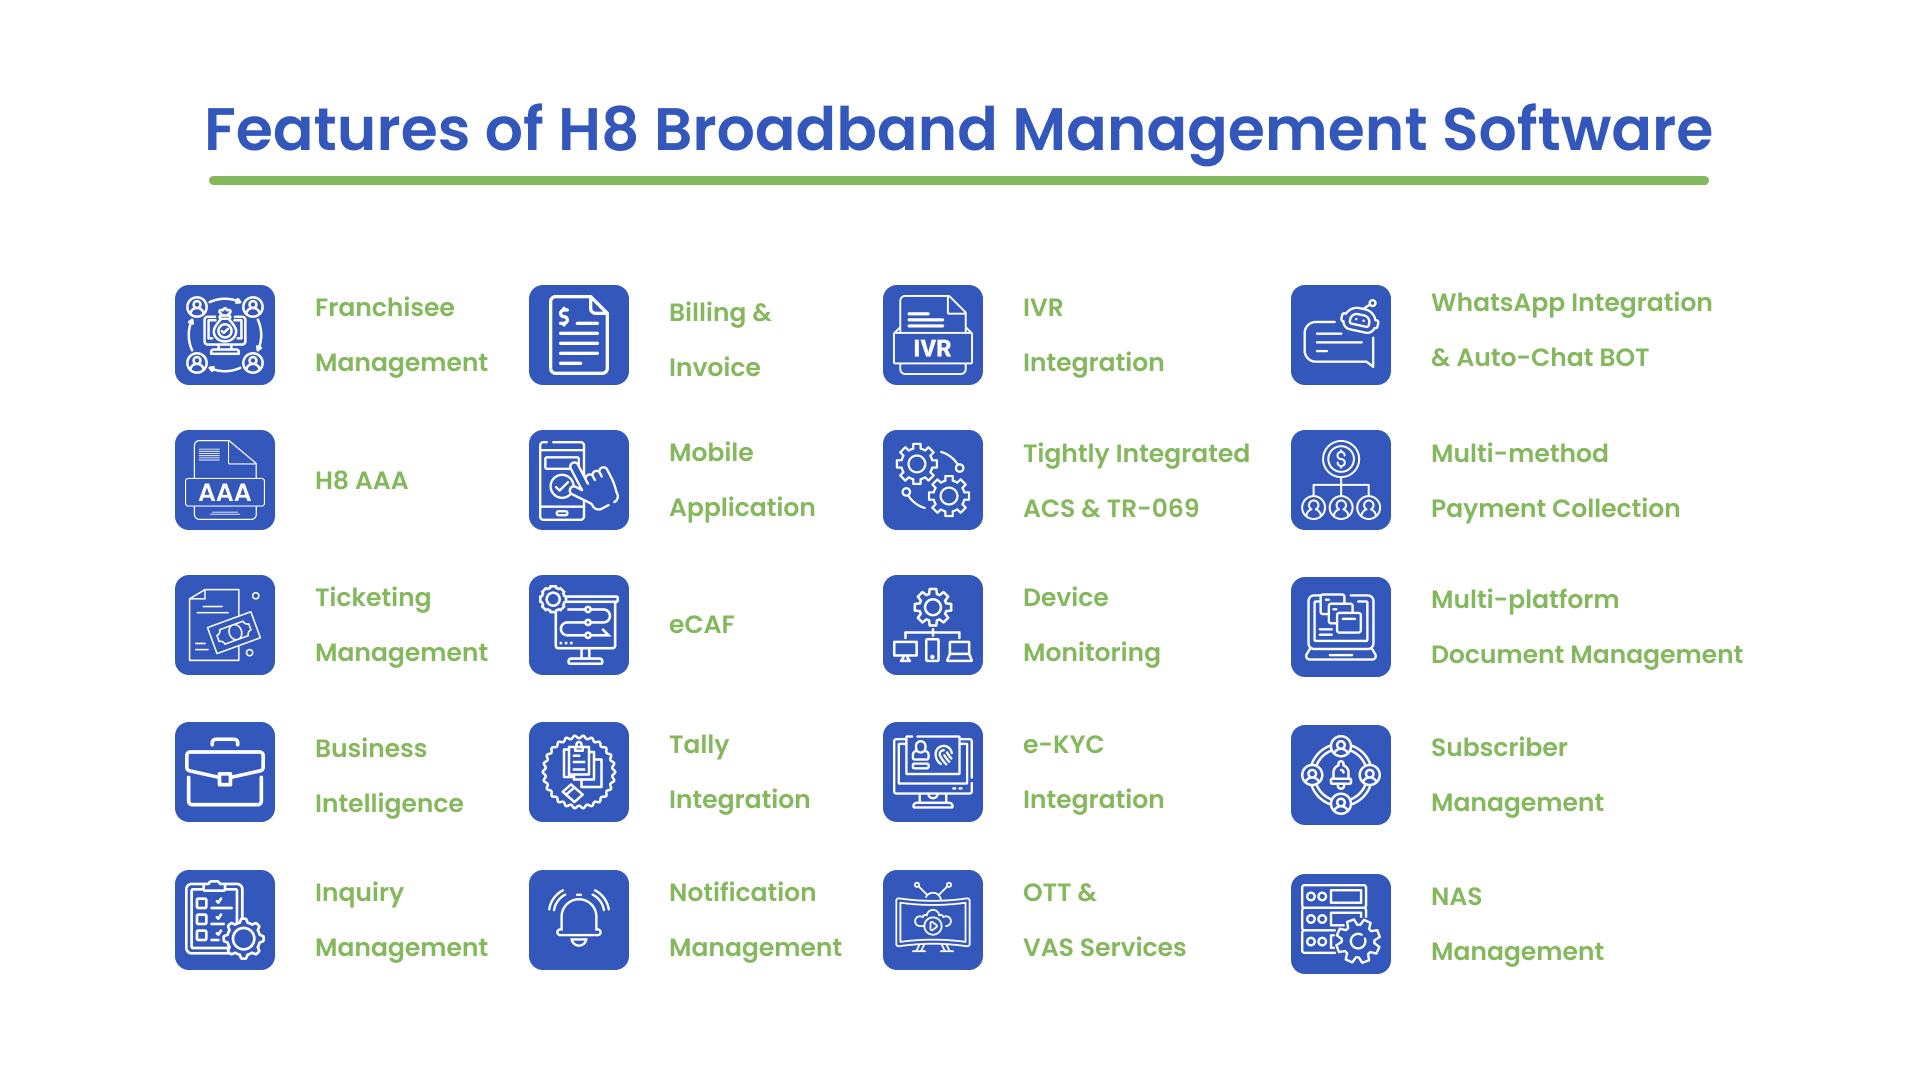 H8 Broadband Management